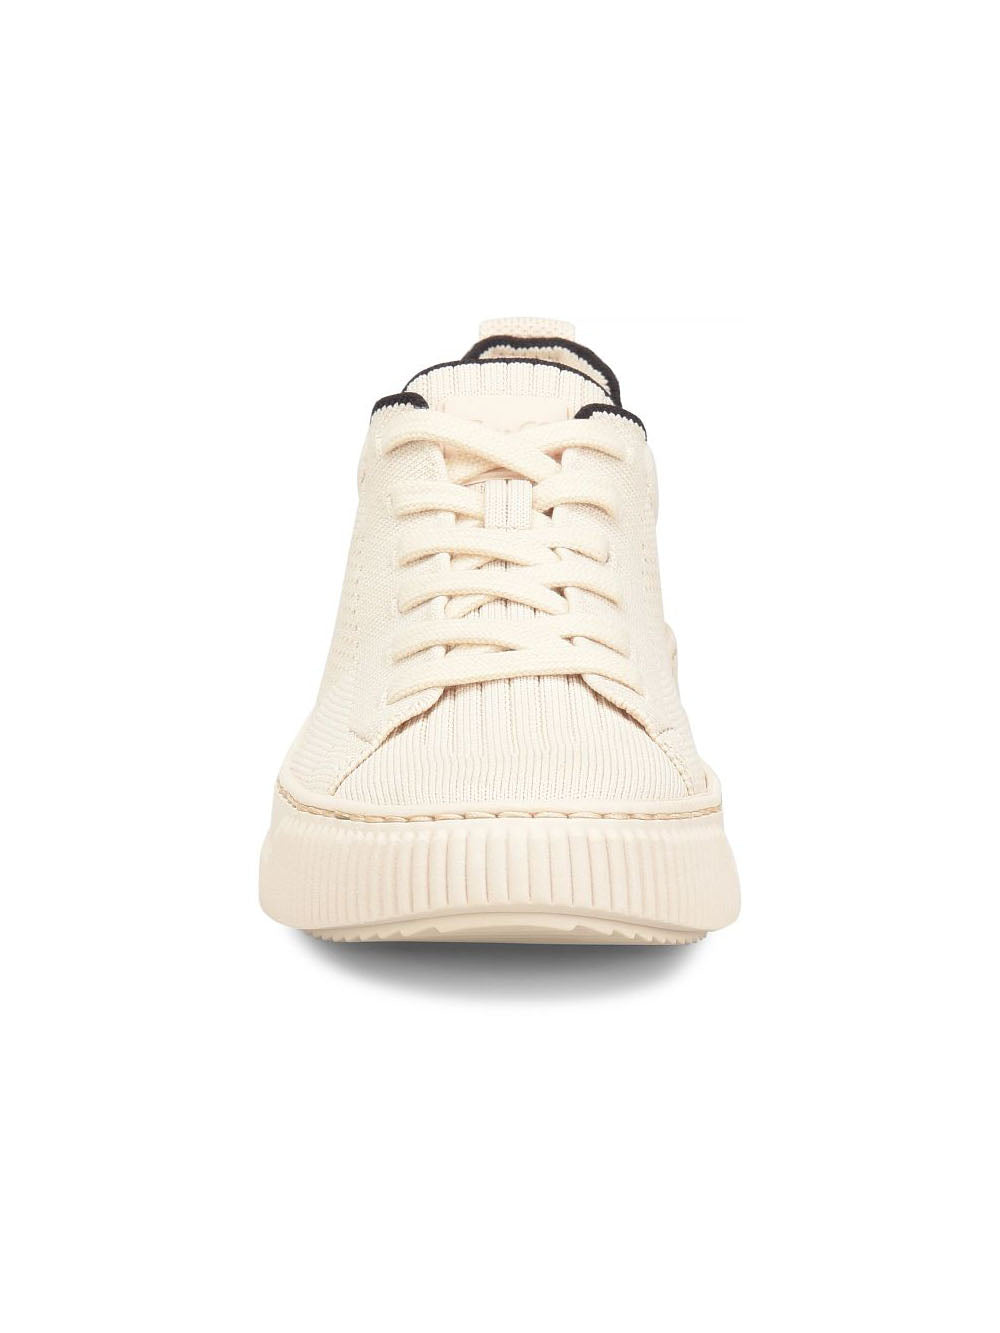 sofft shoes faro knit mesh sneaker in tofu beige tan